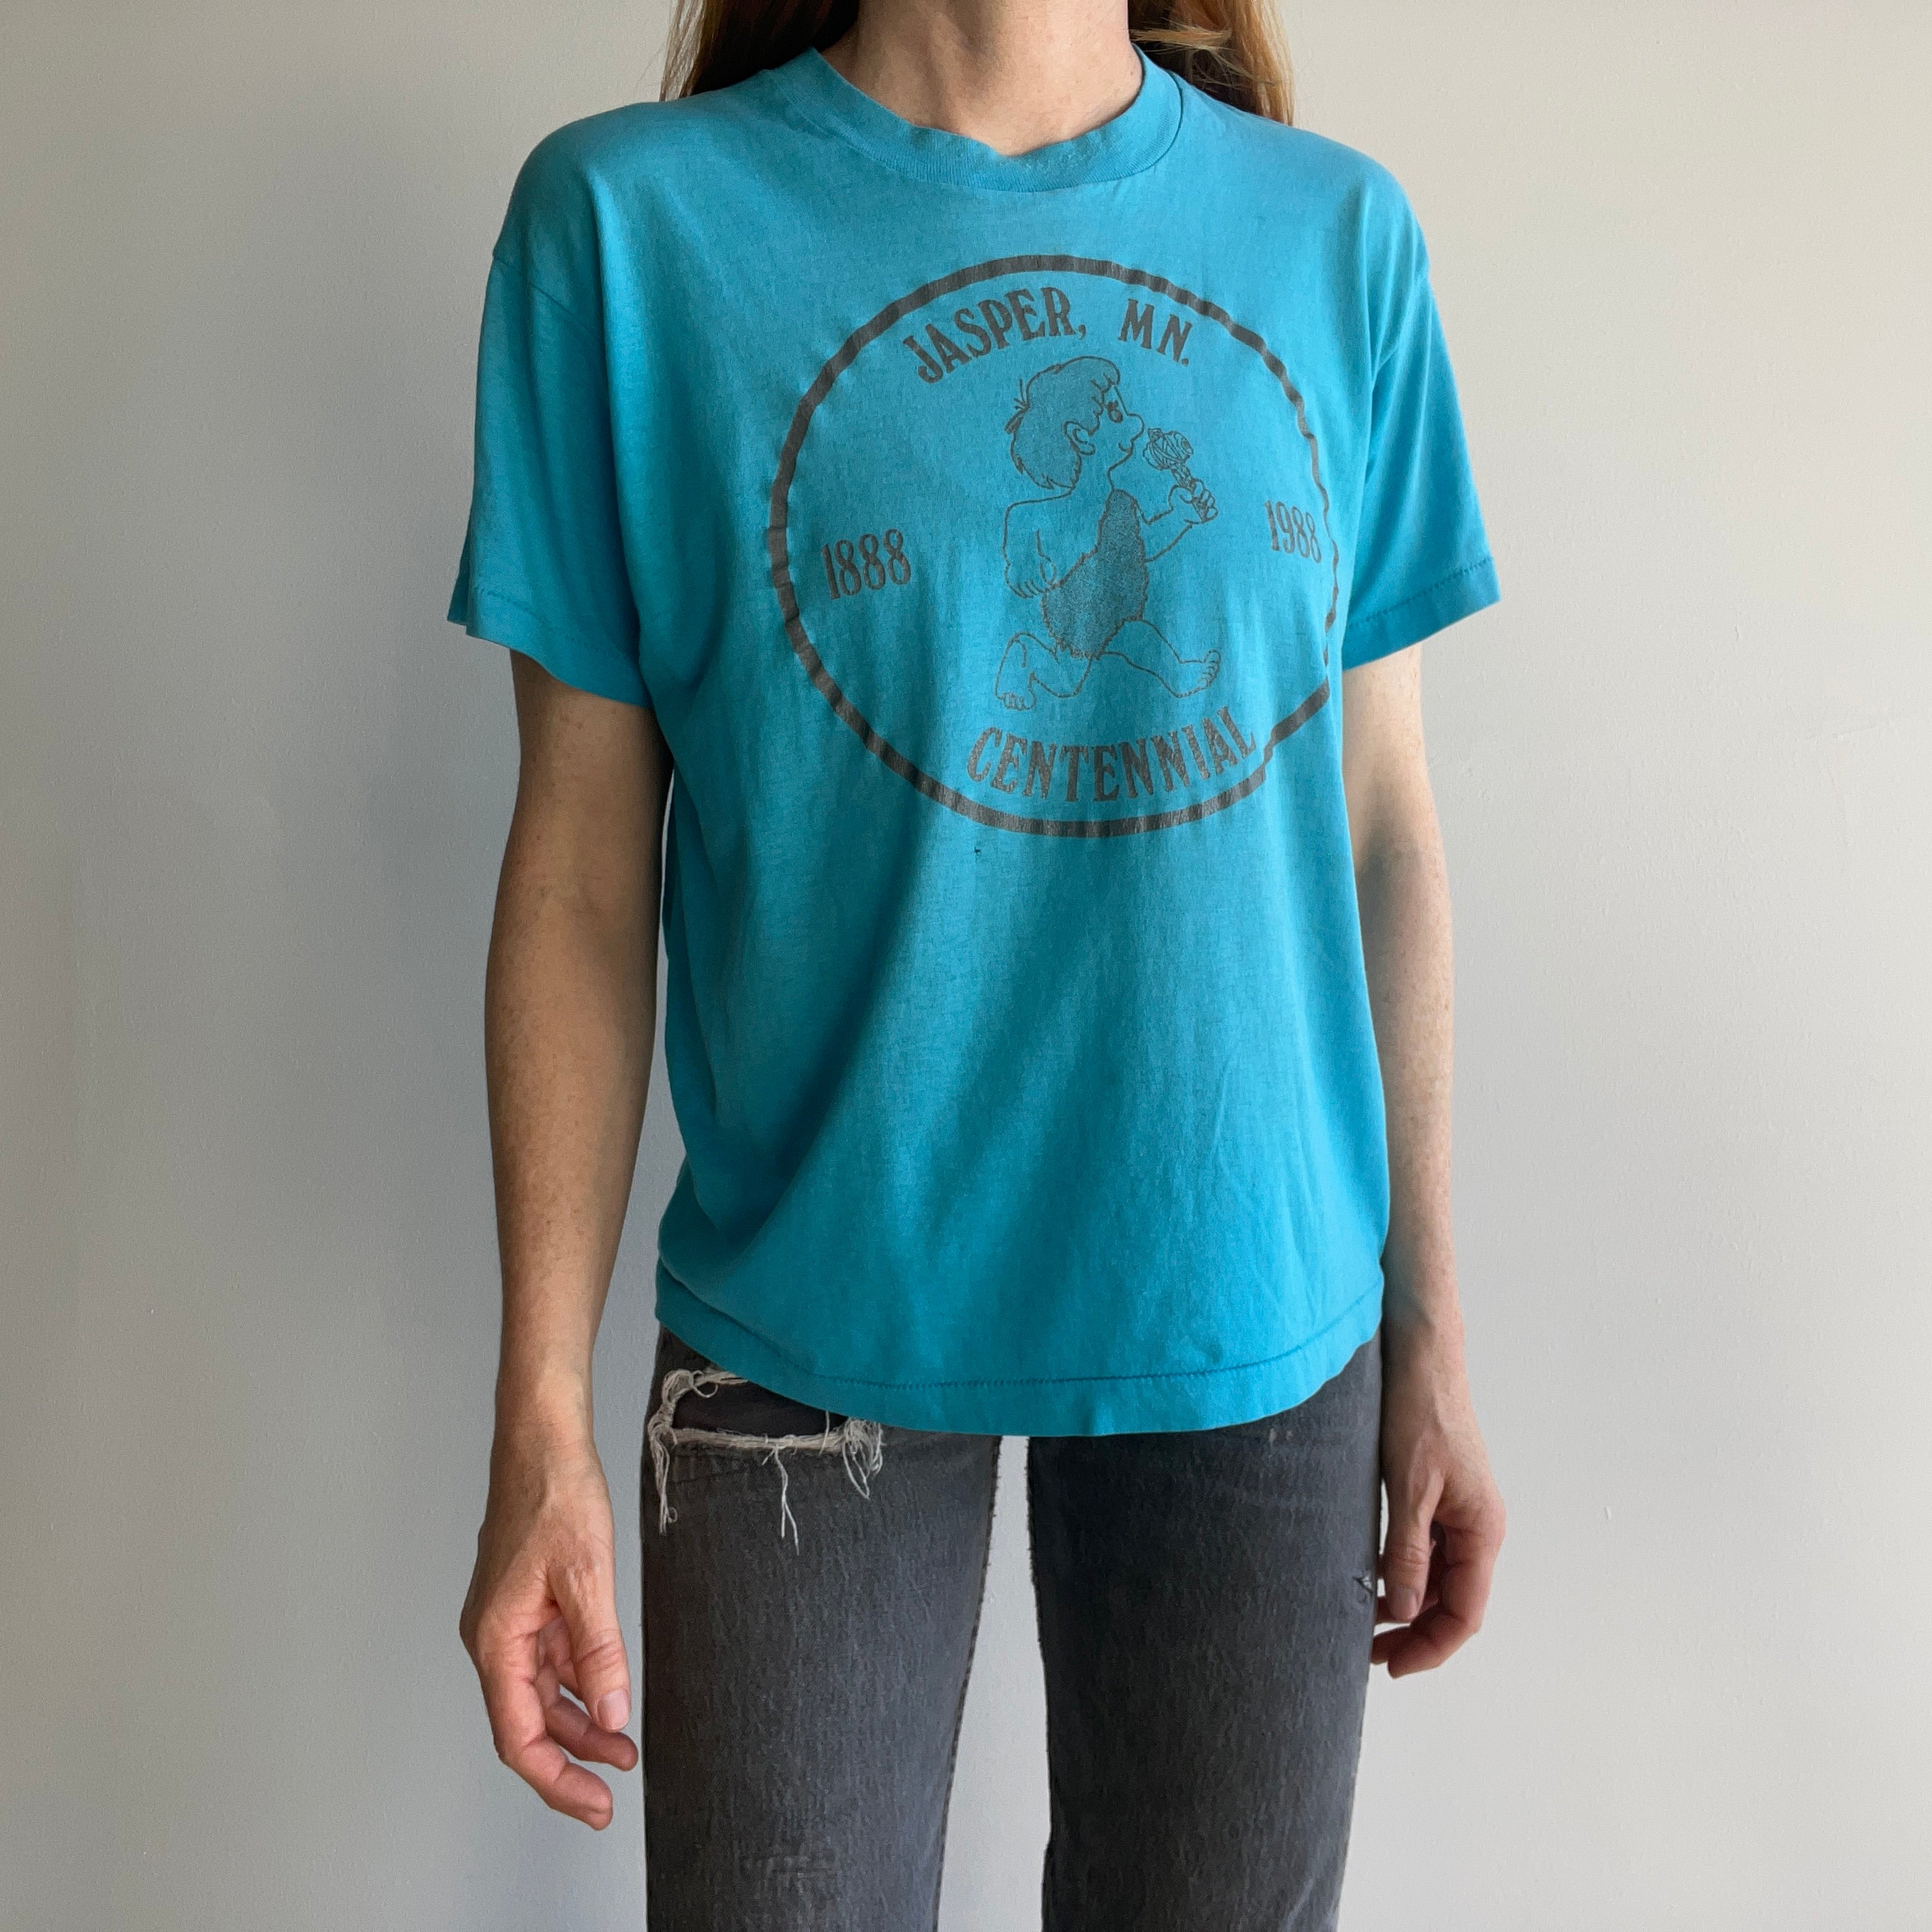 1988 Jasper, Minnesota Centennial Thin and Slouchy Single Stitch T-Shirt with a Cute Little Fellow